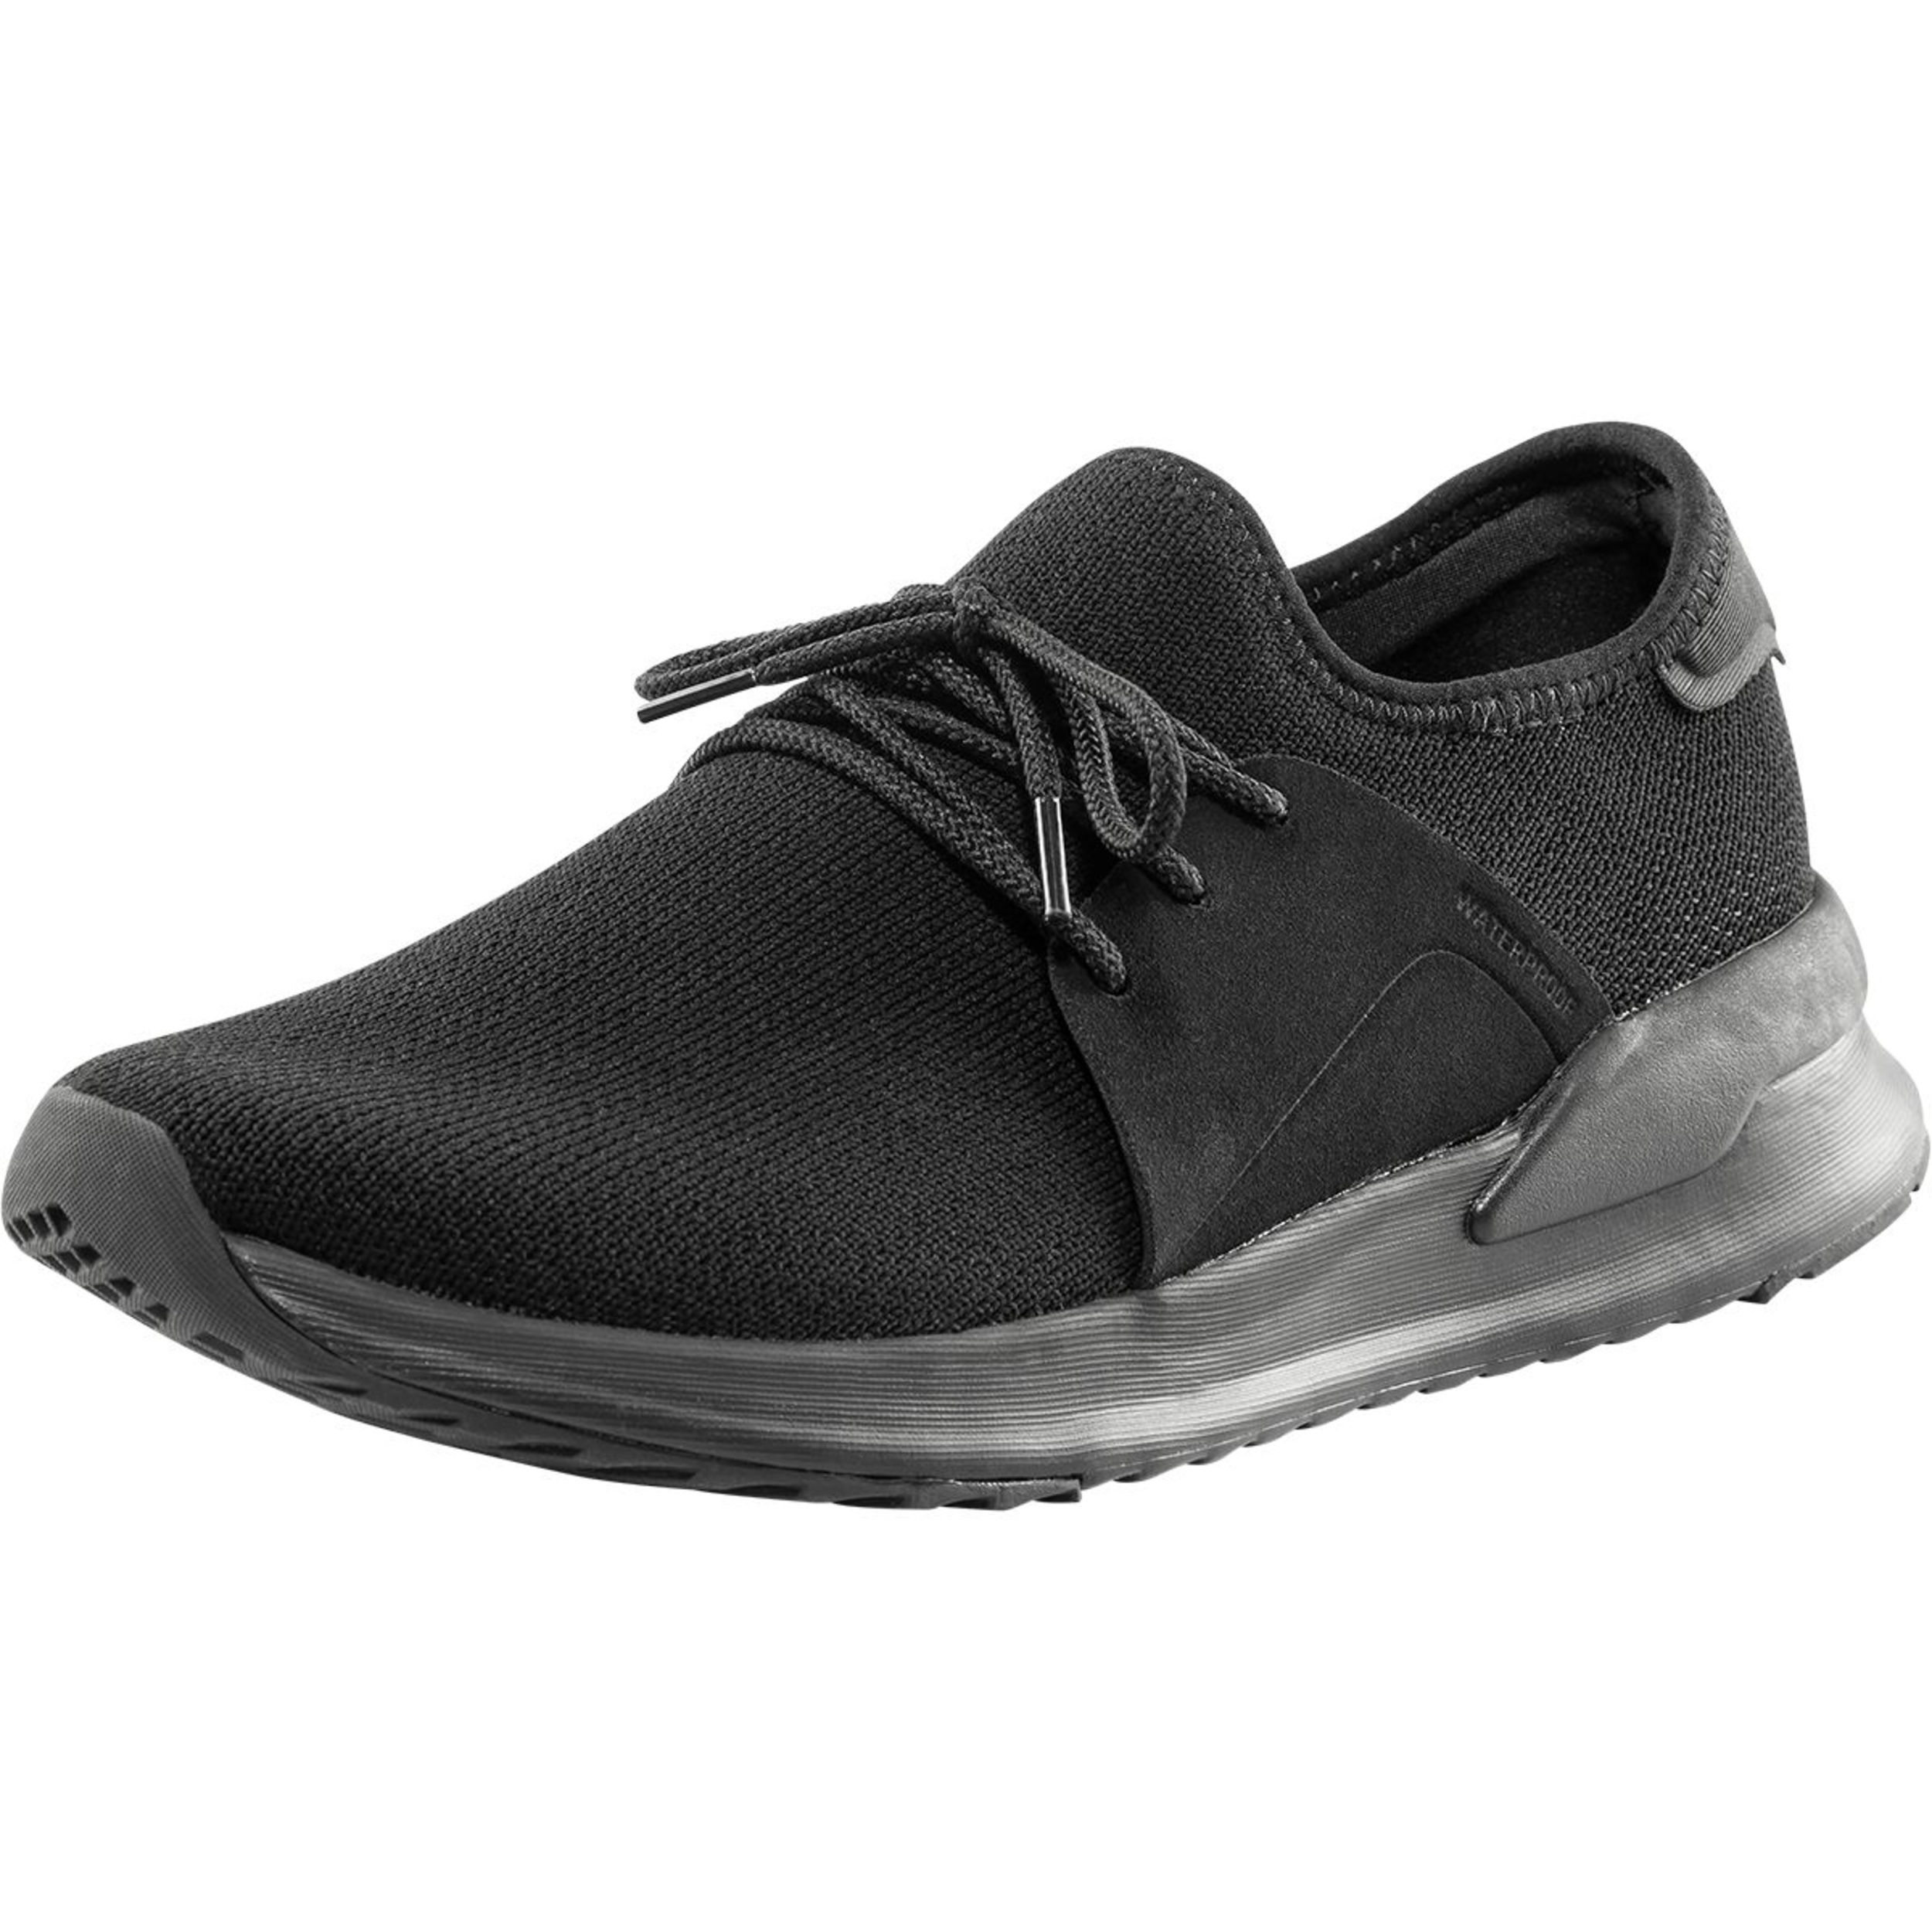 Ripzone Men's Lane Water Shoes | SportChek